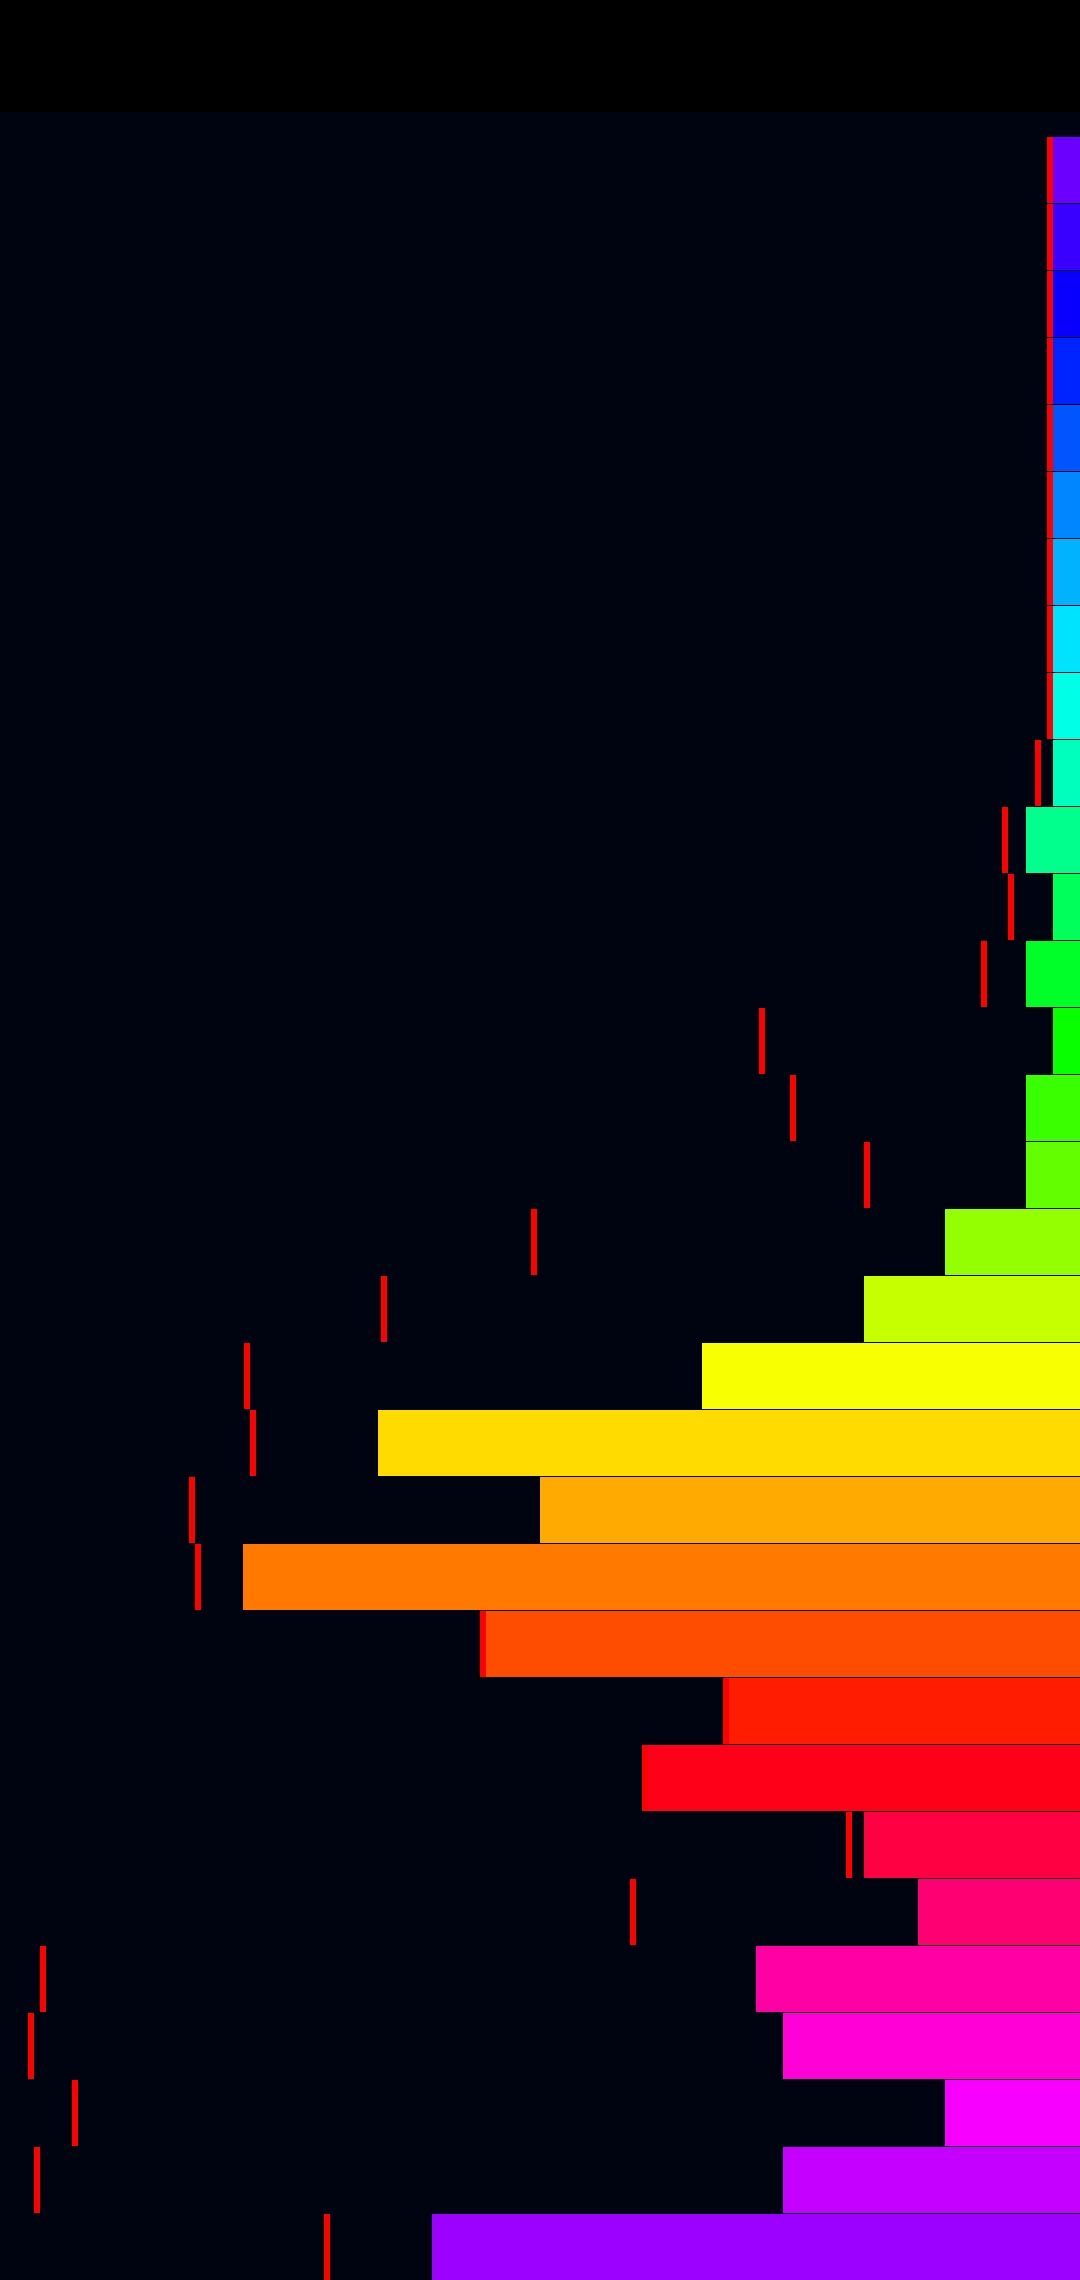 Visual Spectrum shows a classic bar visual